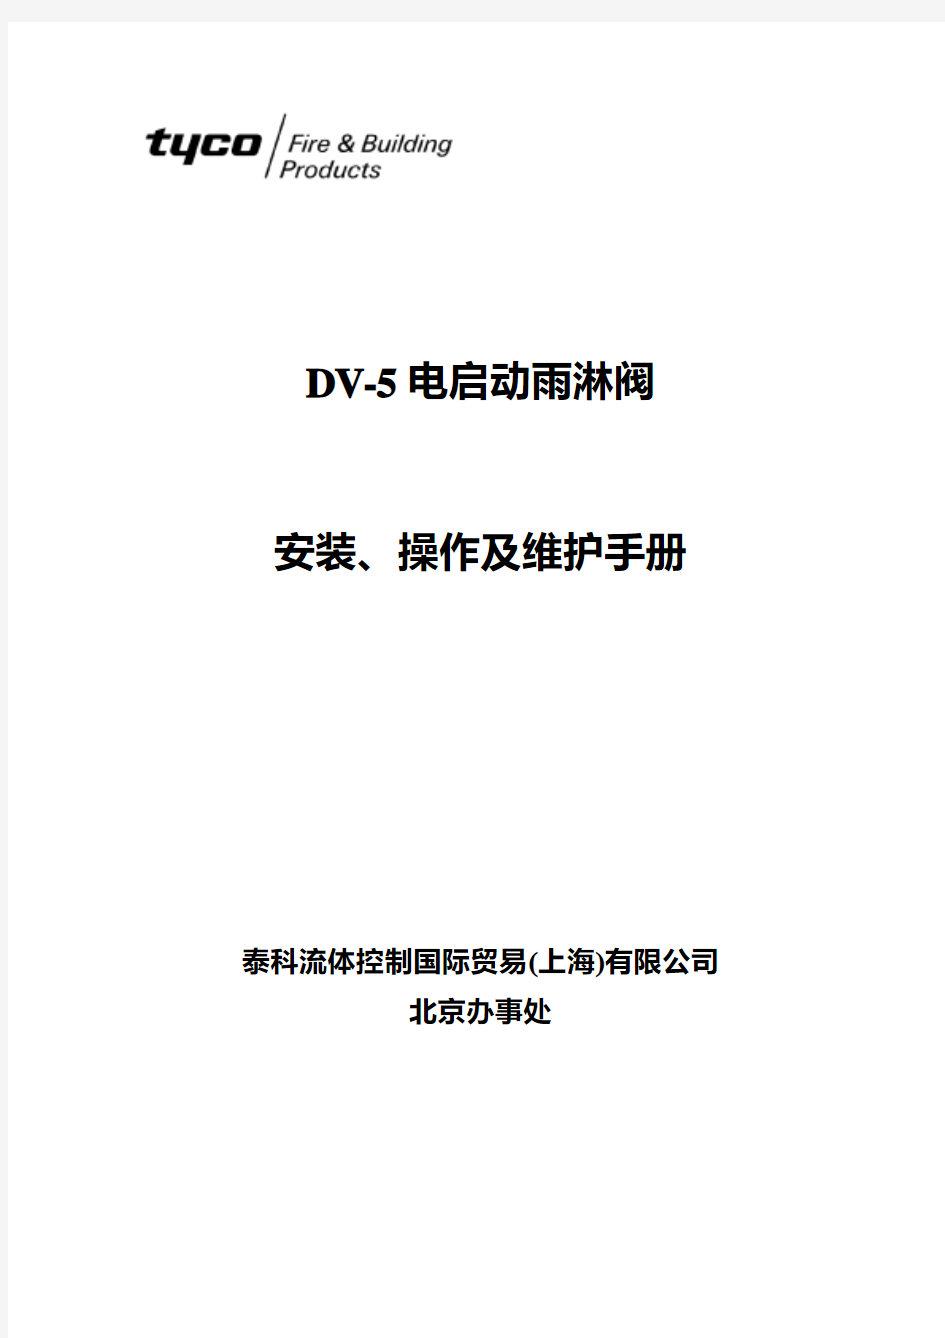 DV-5雨淋阀中文说明